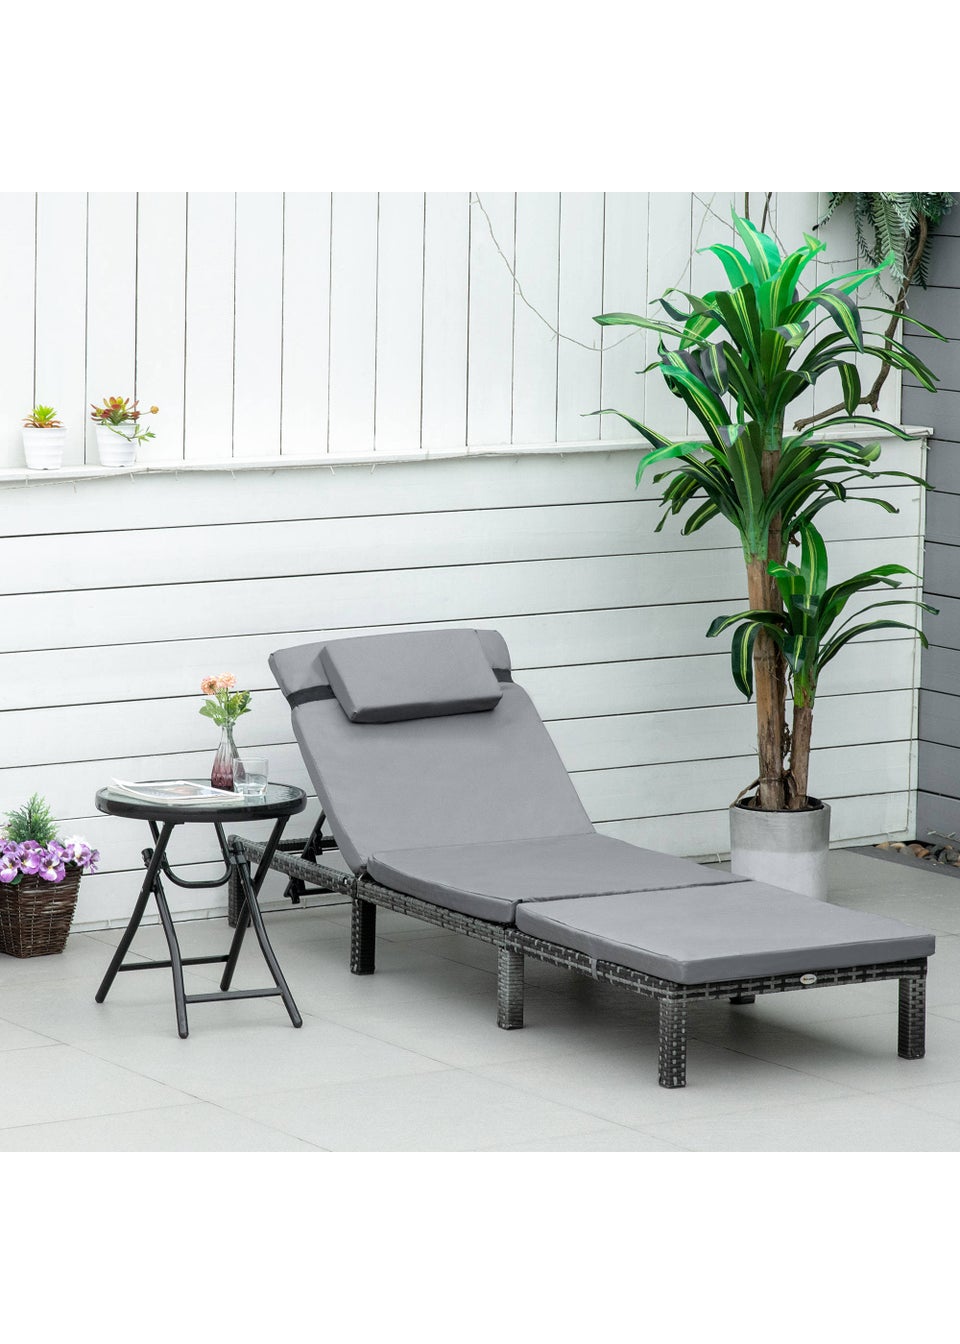 Outsunny Garden Rattan Furniture Recliner Sun Lounger (195cm x 65cm x 22cm)